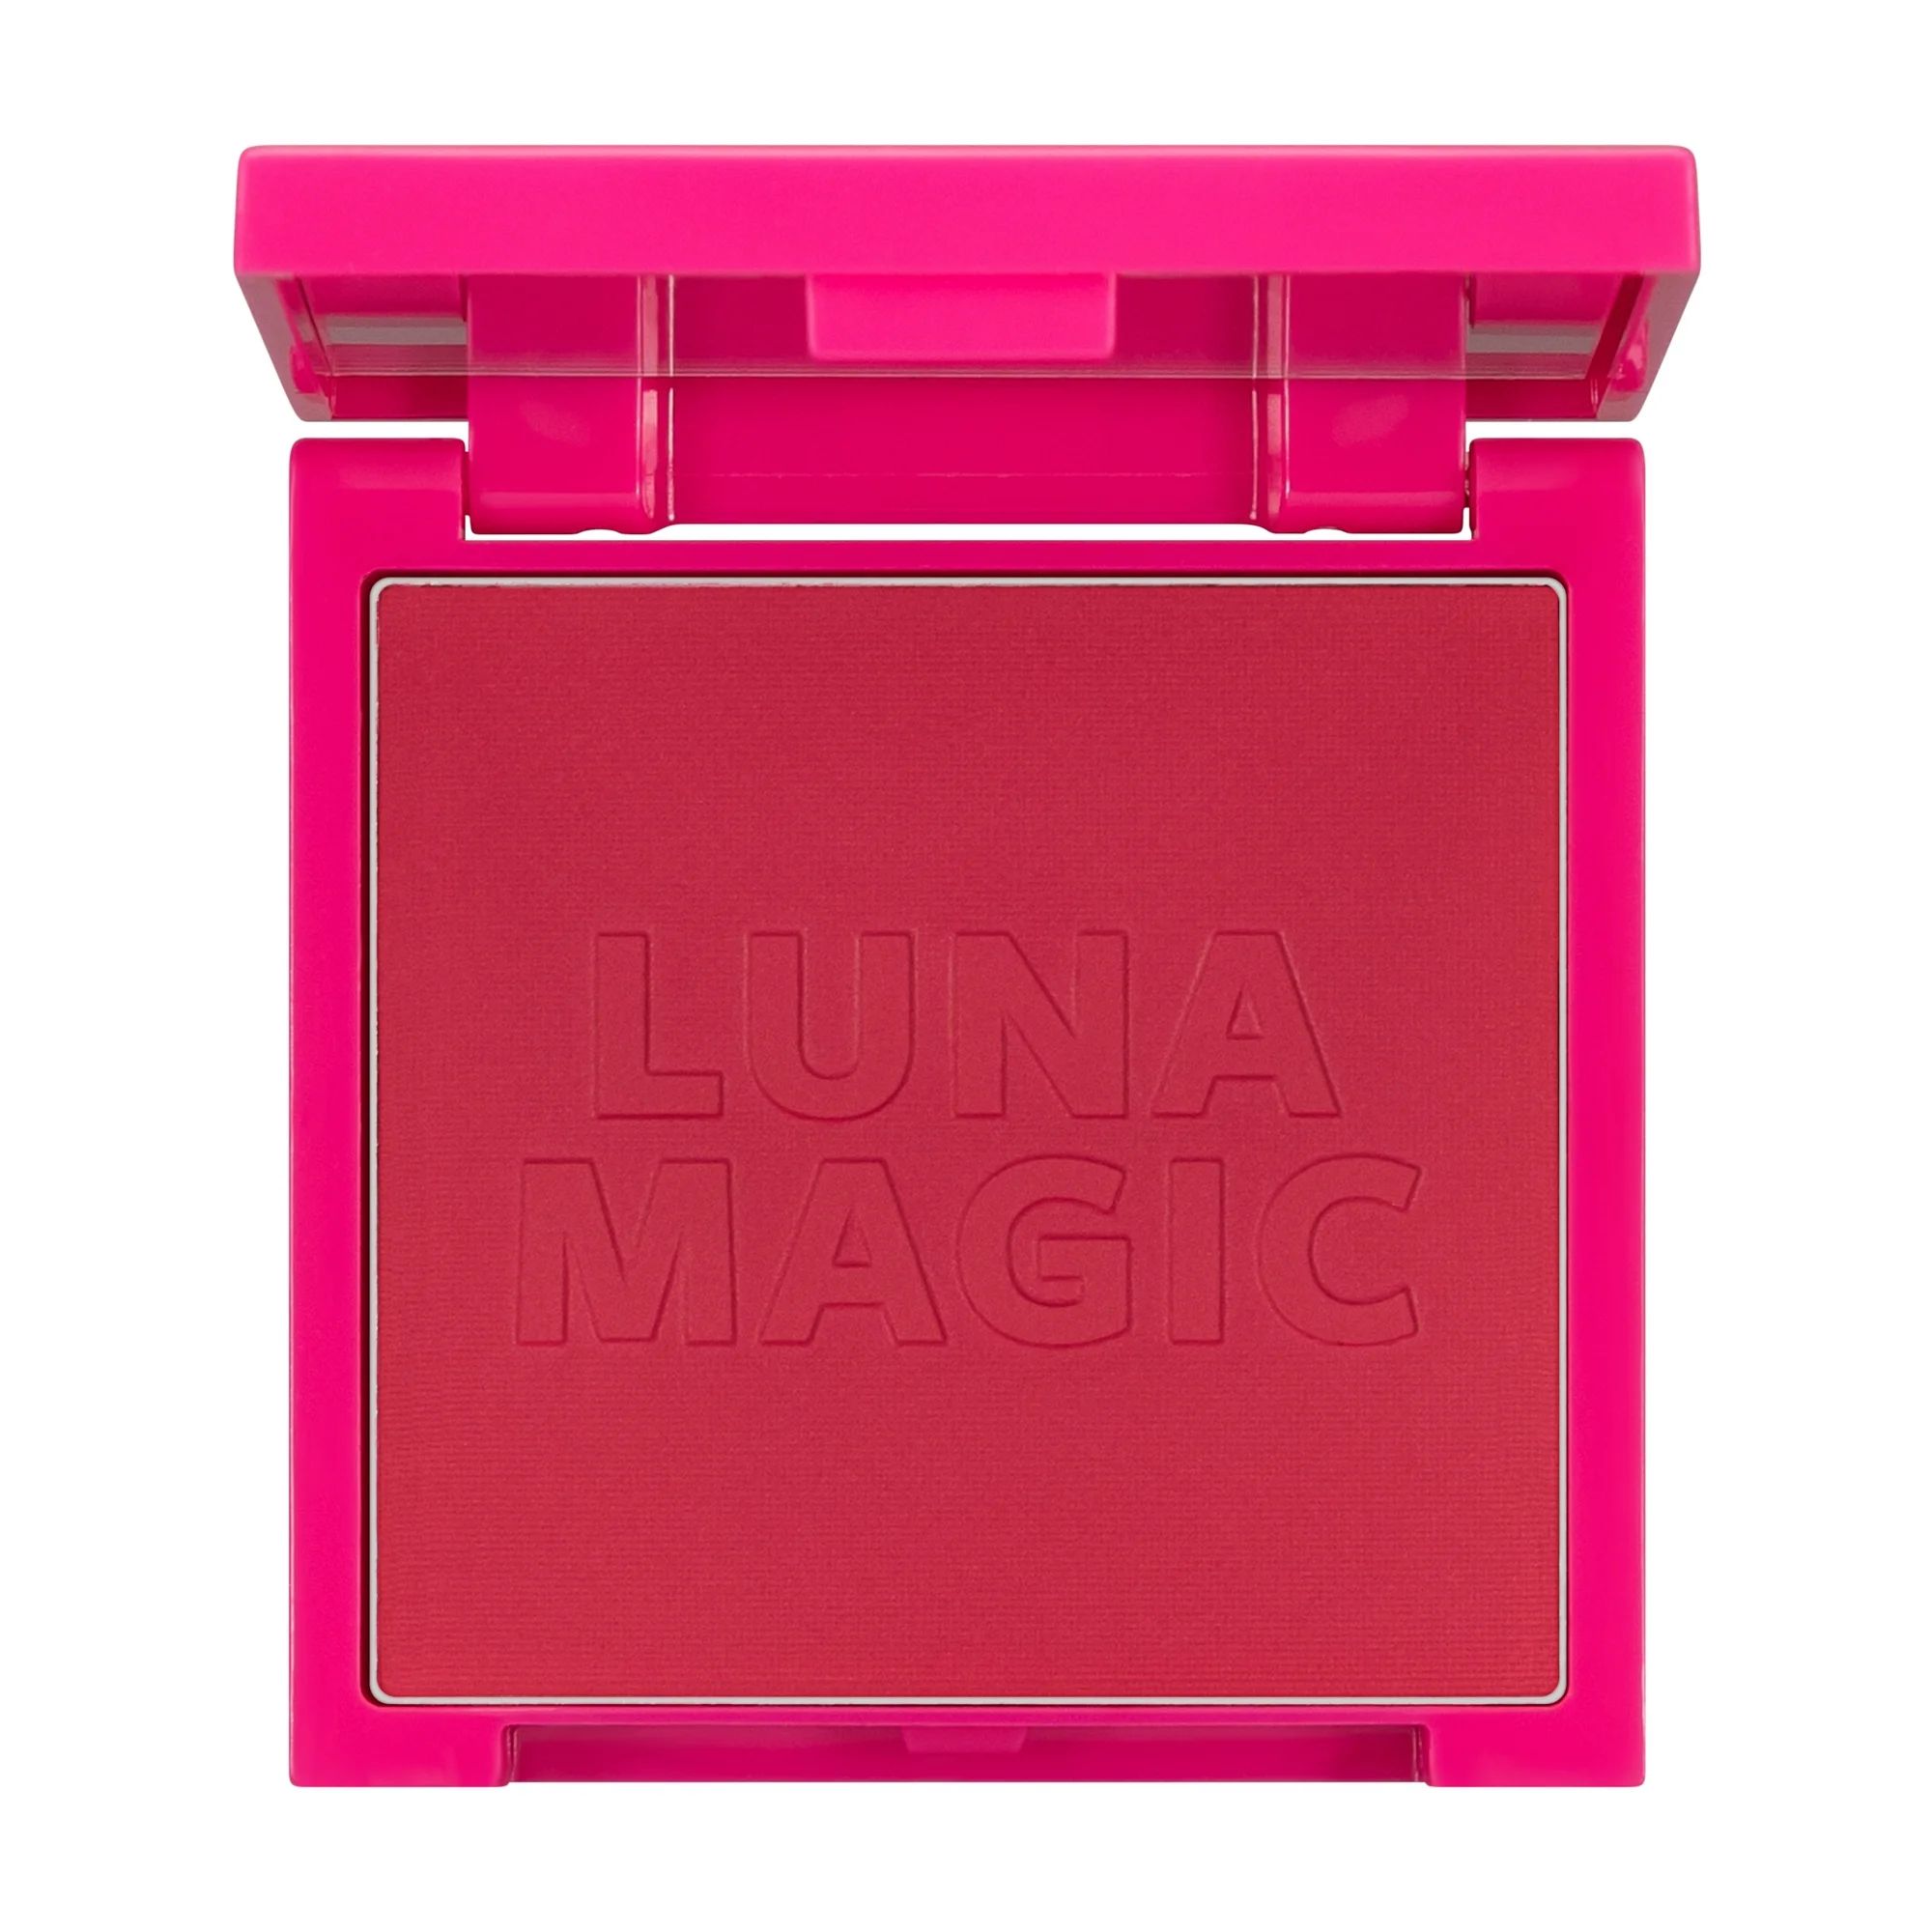 Luna Magic Compact Pressed Blush - Anita | Walmart (US)